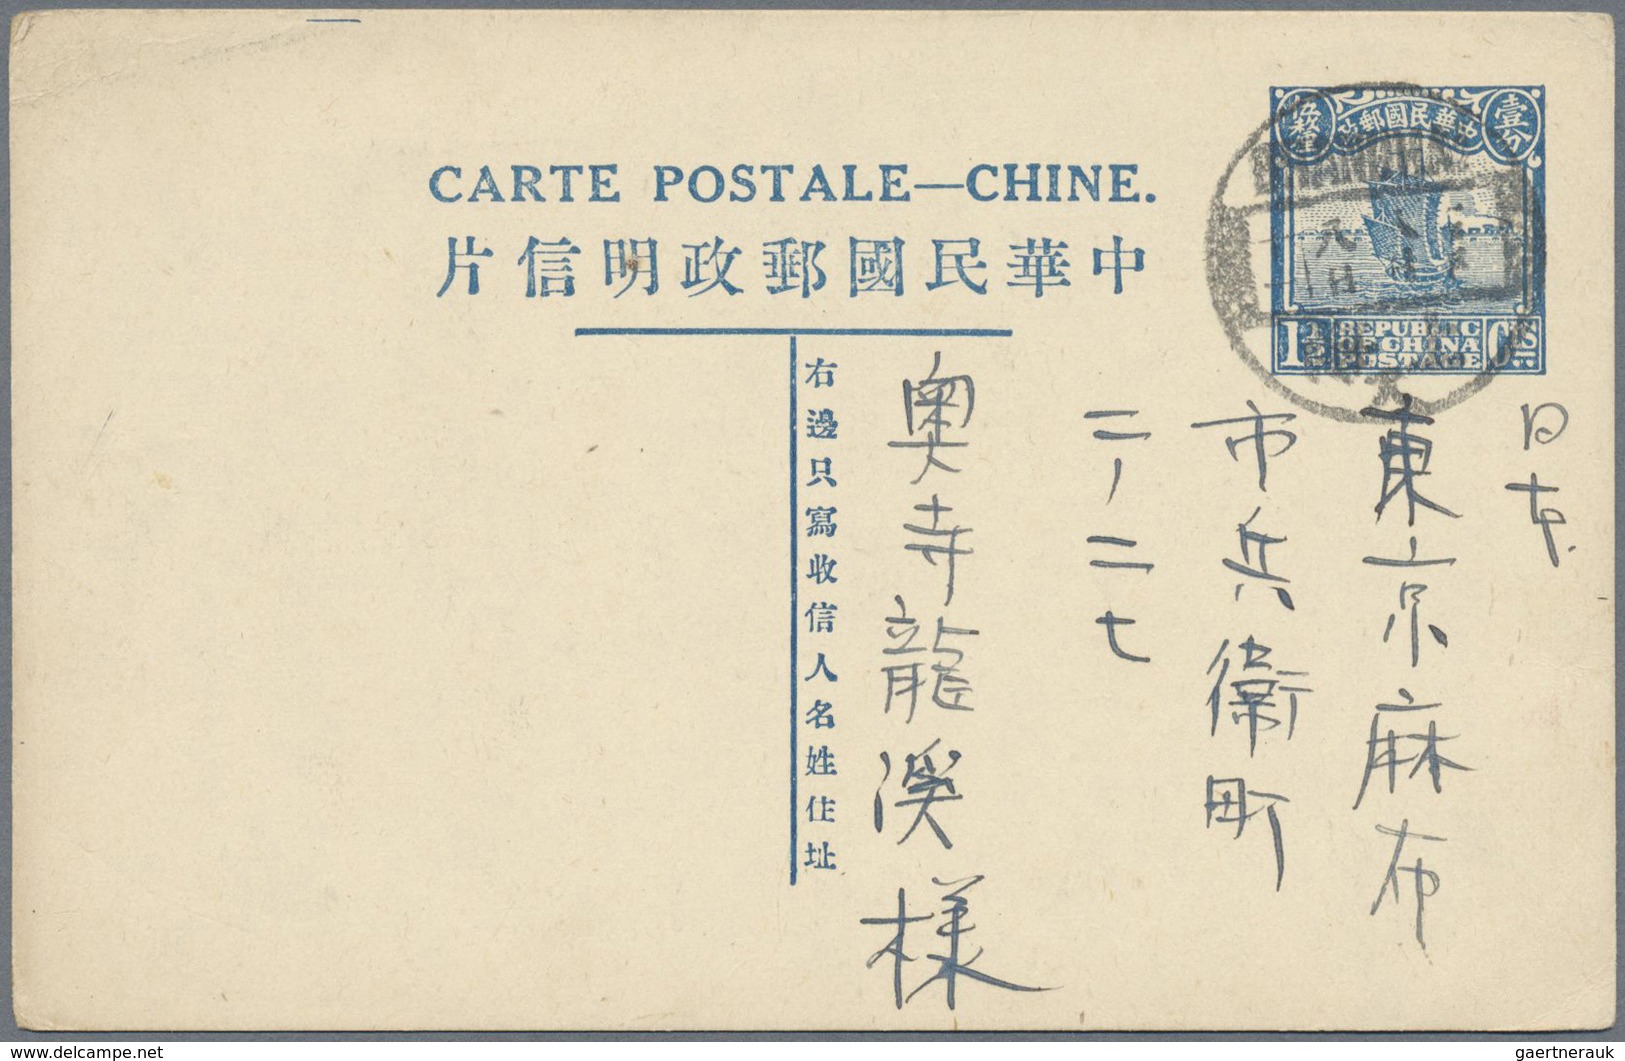 GA China - Ganzsachen: 1898/1925 (ca.), stationery cards used (7) inc. uprates, Plus junk cards mint wi